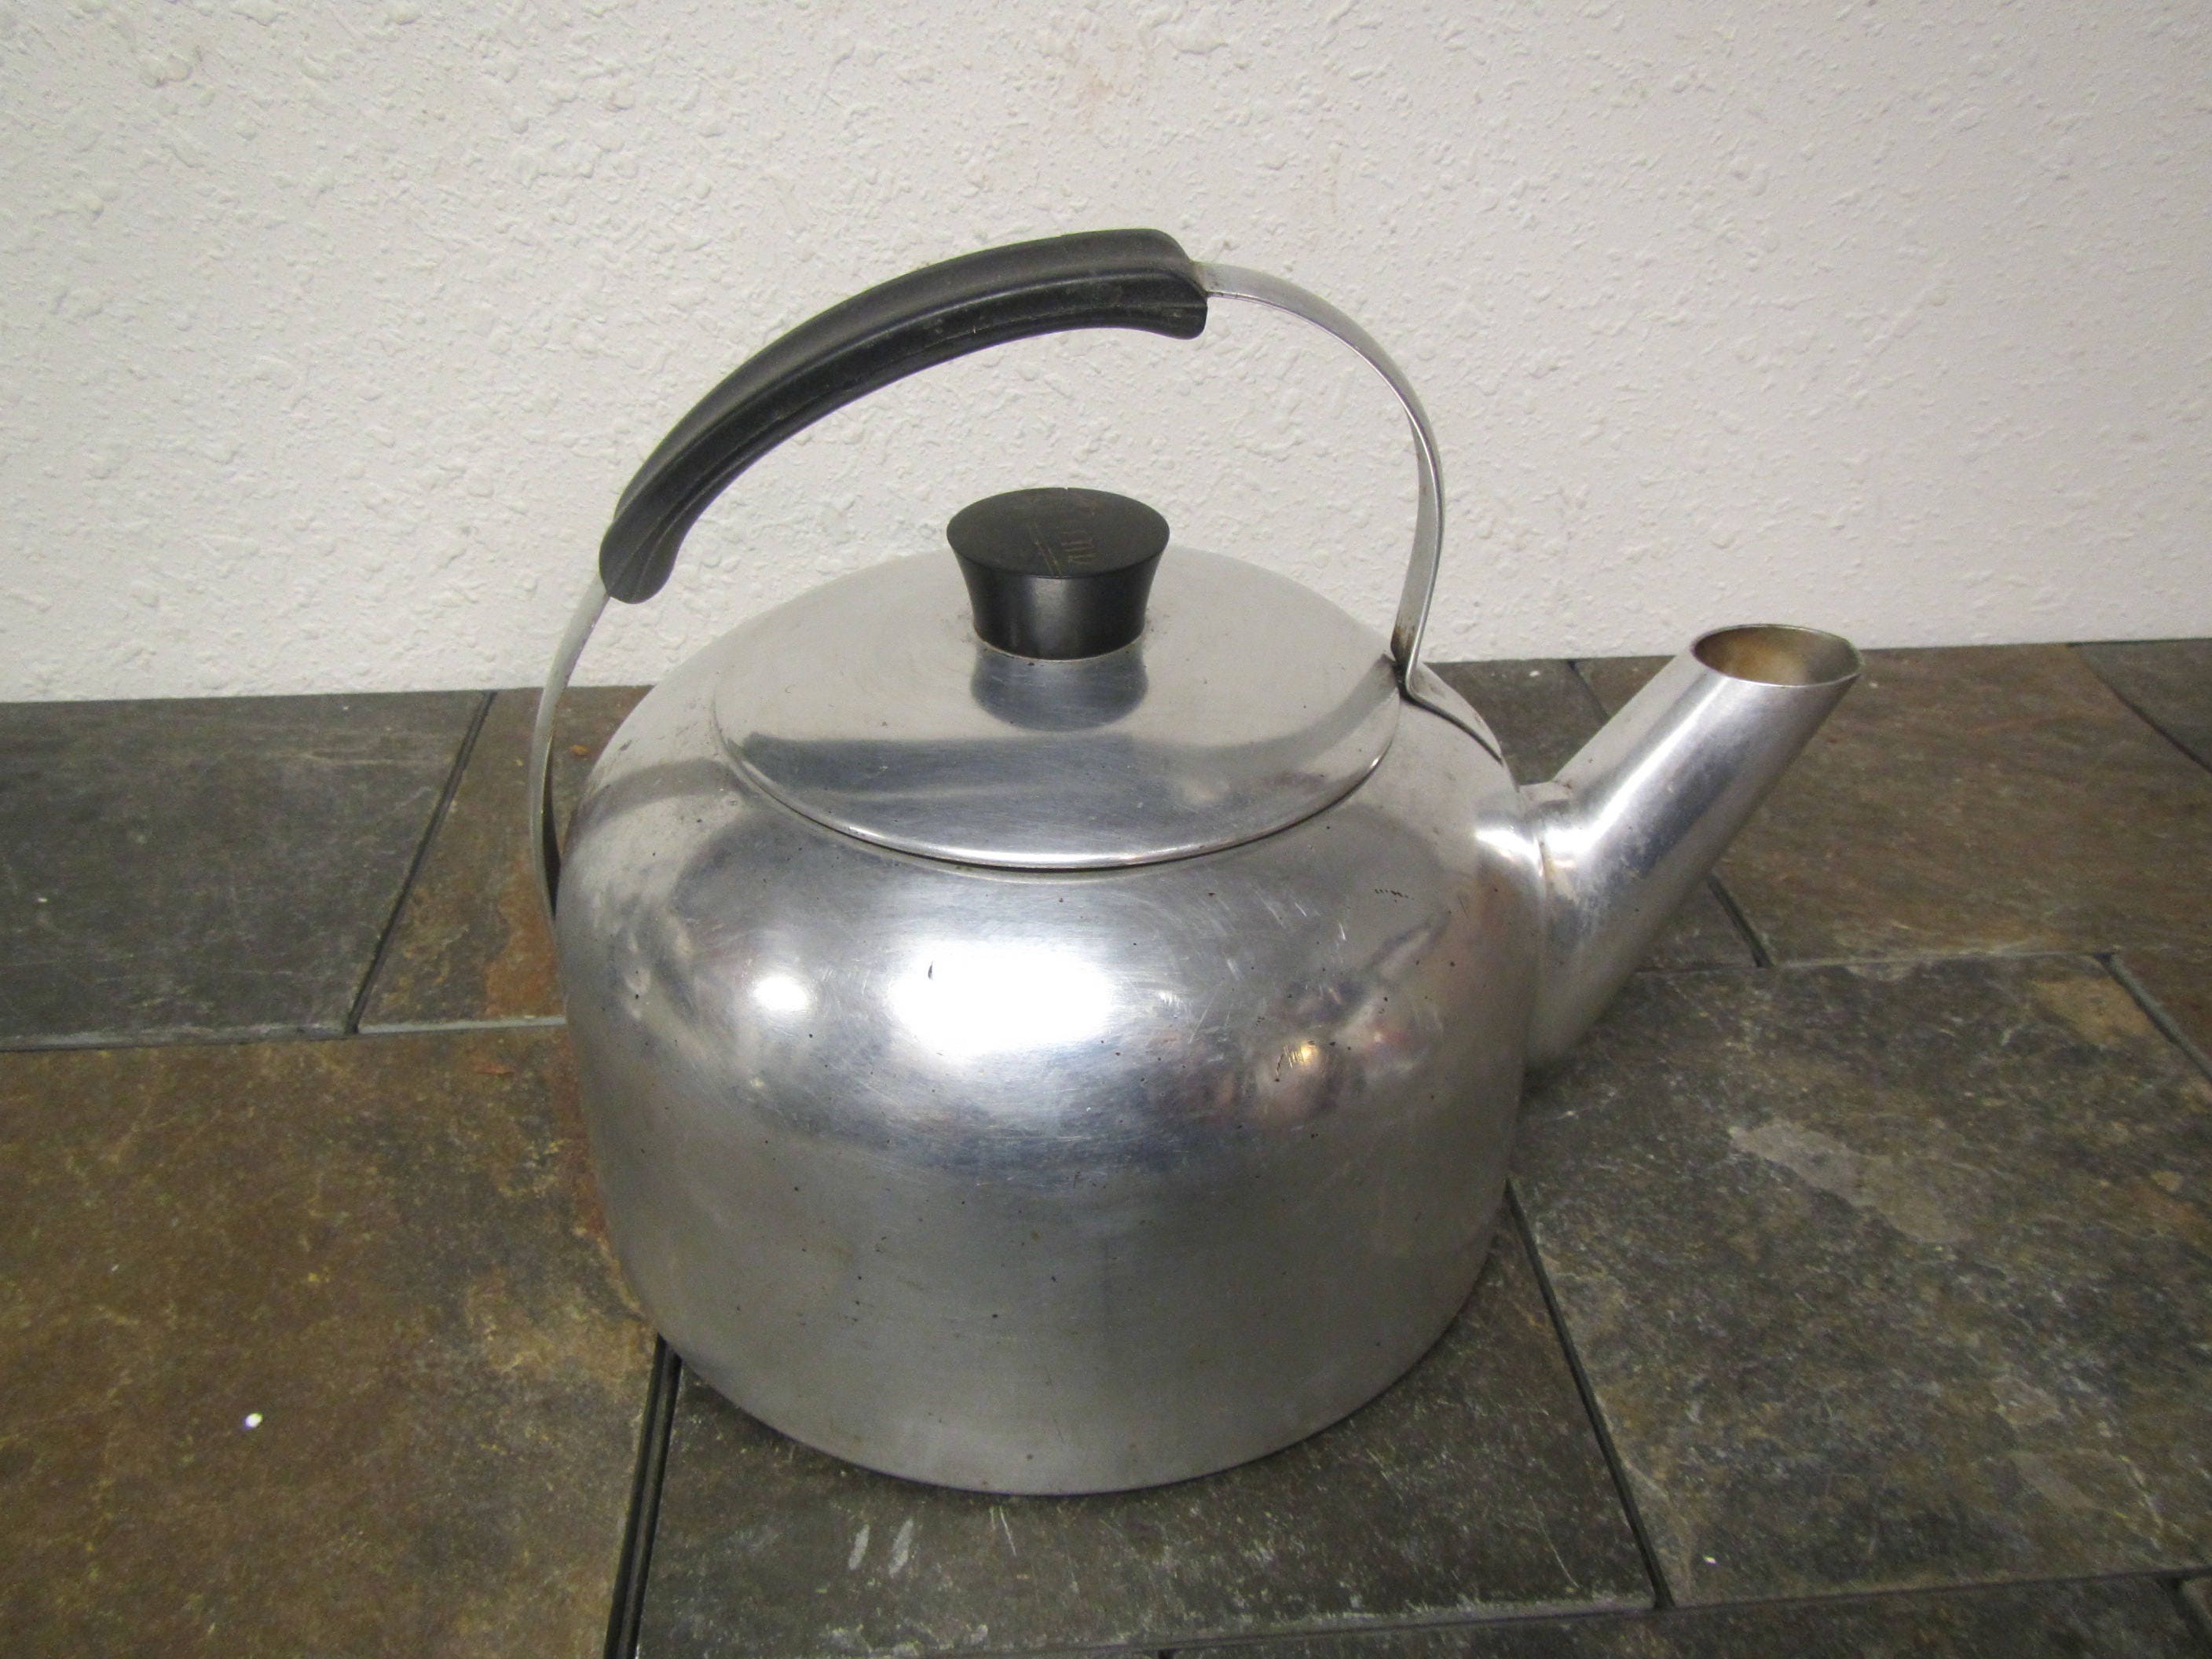 Vintage Viking British Colony Knobler Teapot Aluminum Tea Kettle